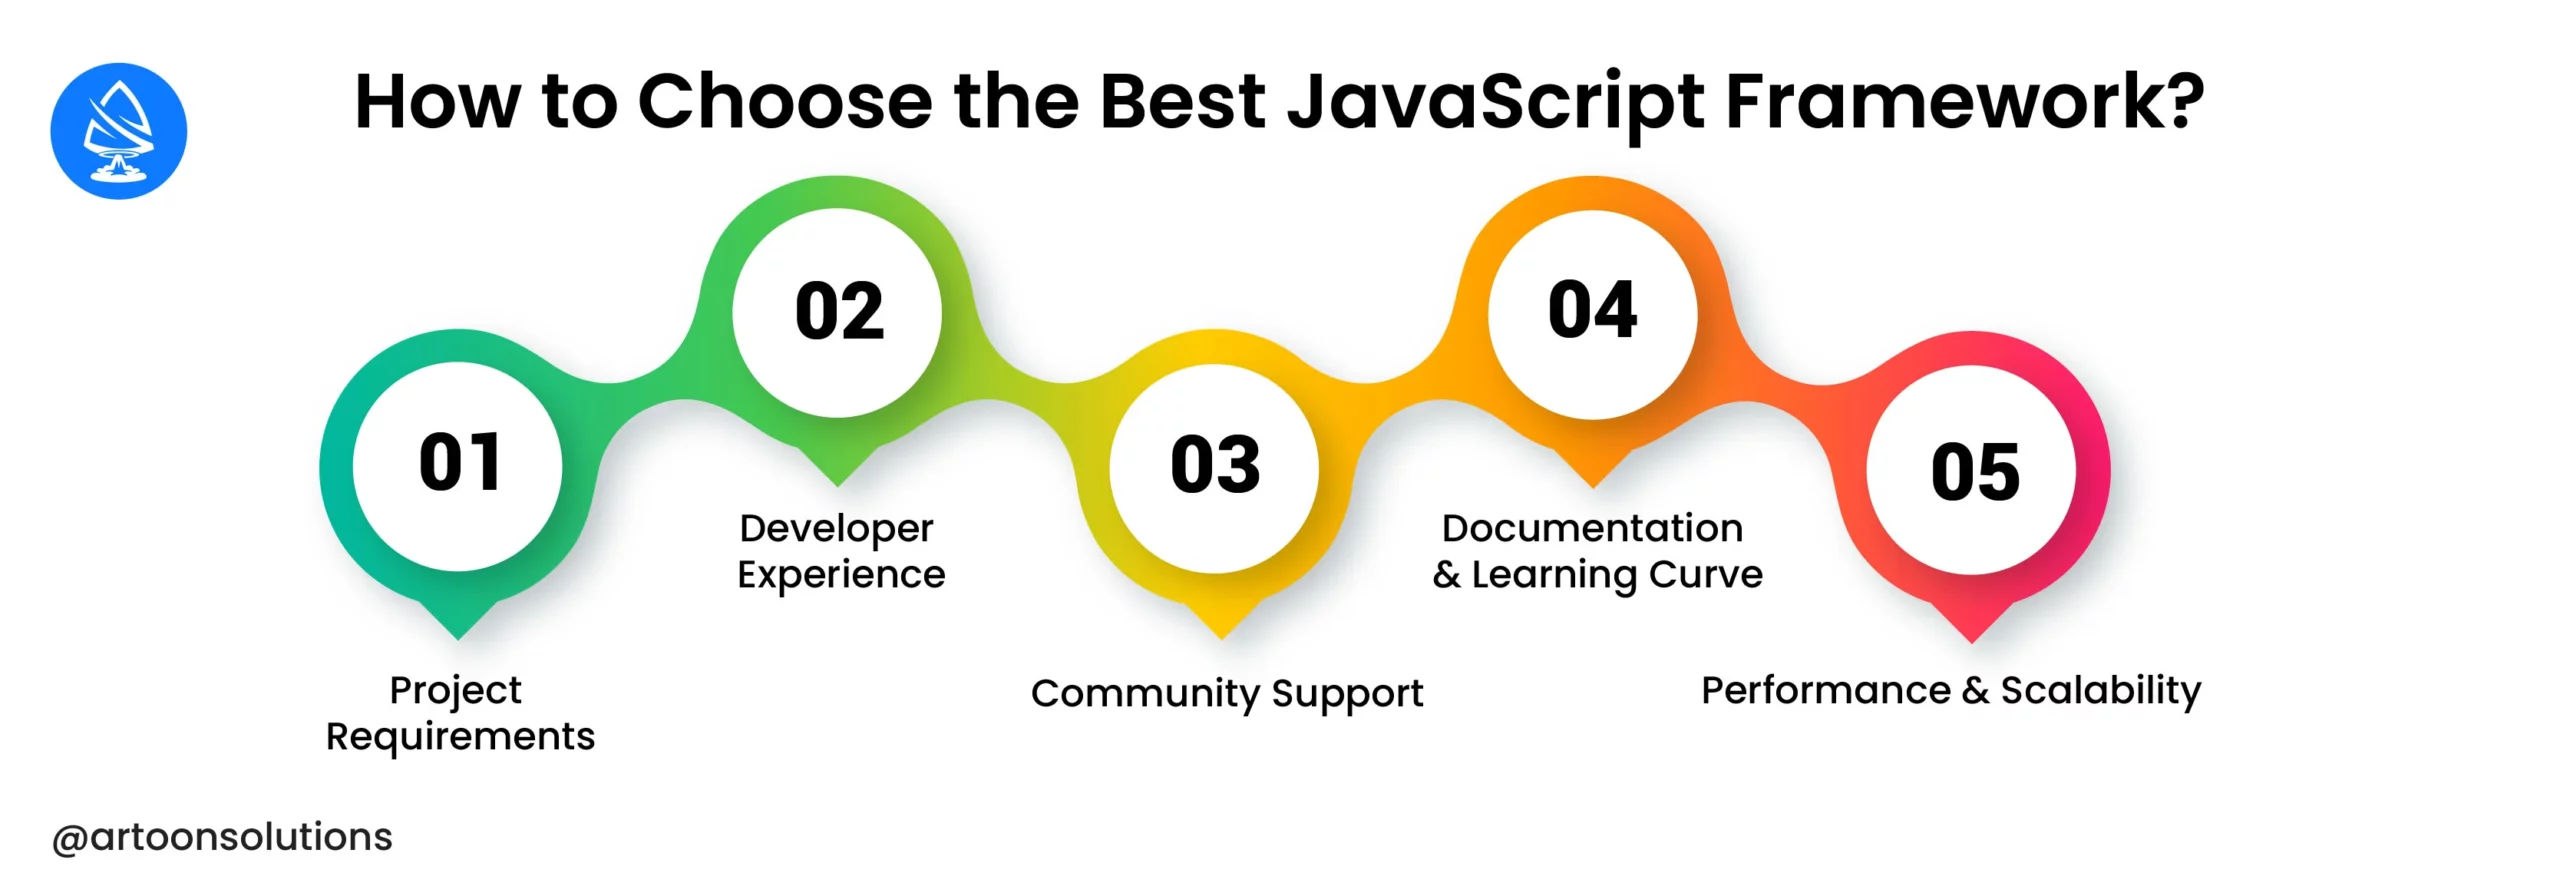 How to Choose the Best Javascript Framework